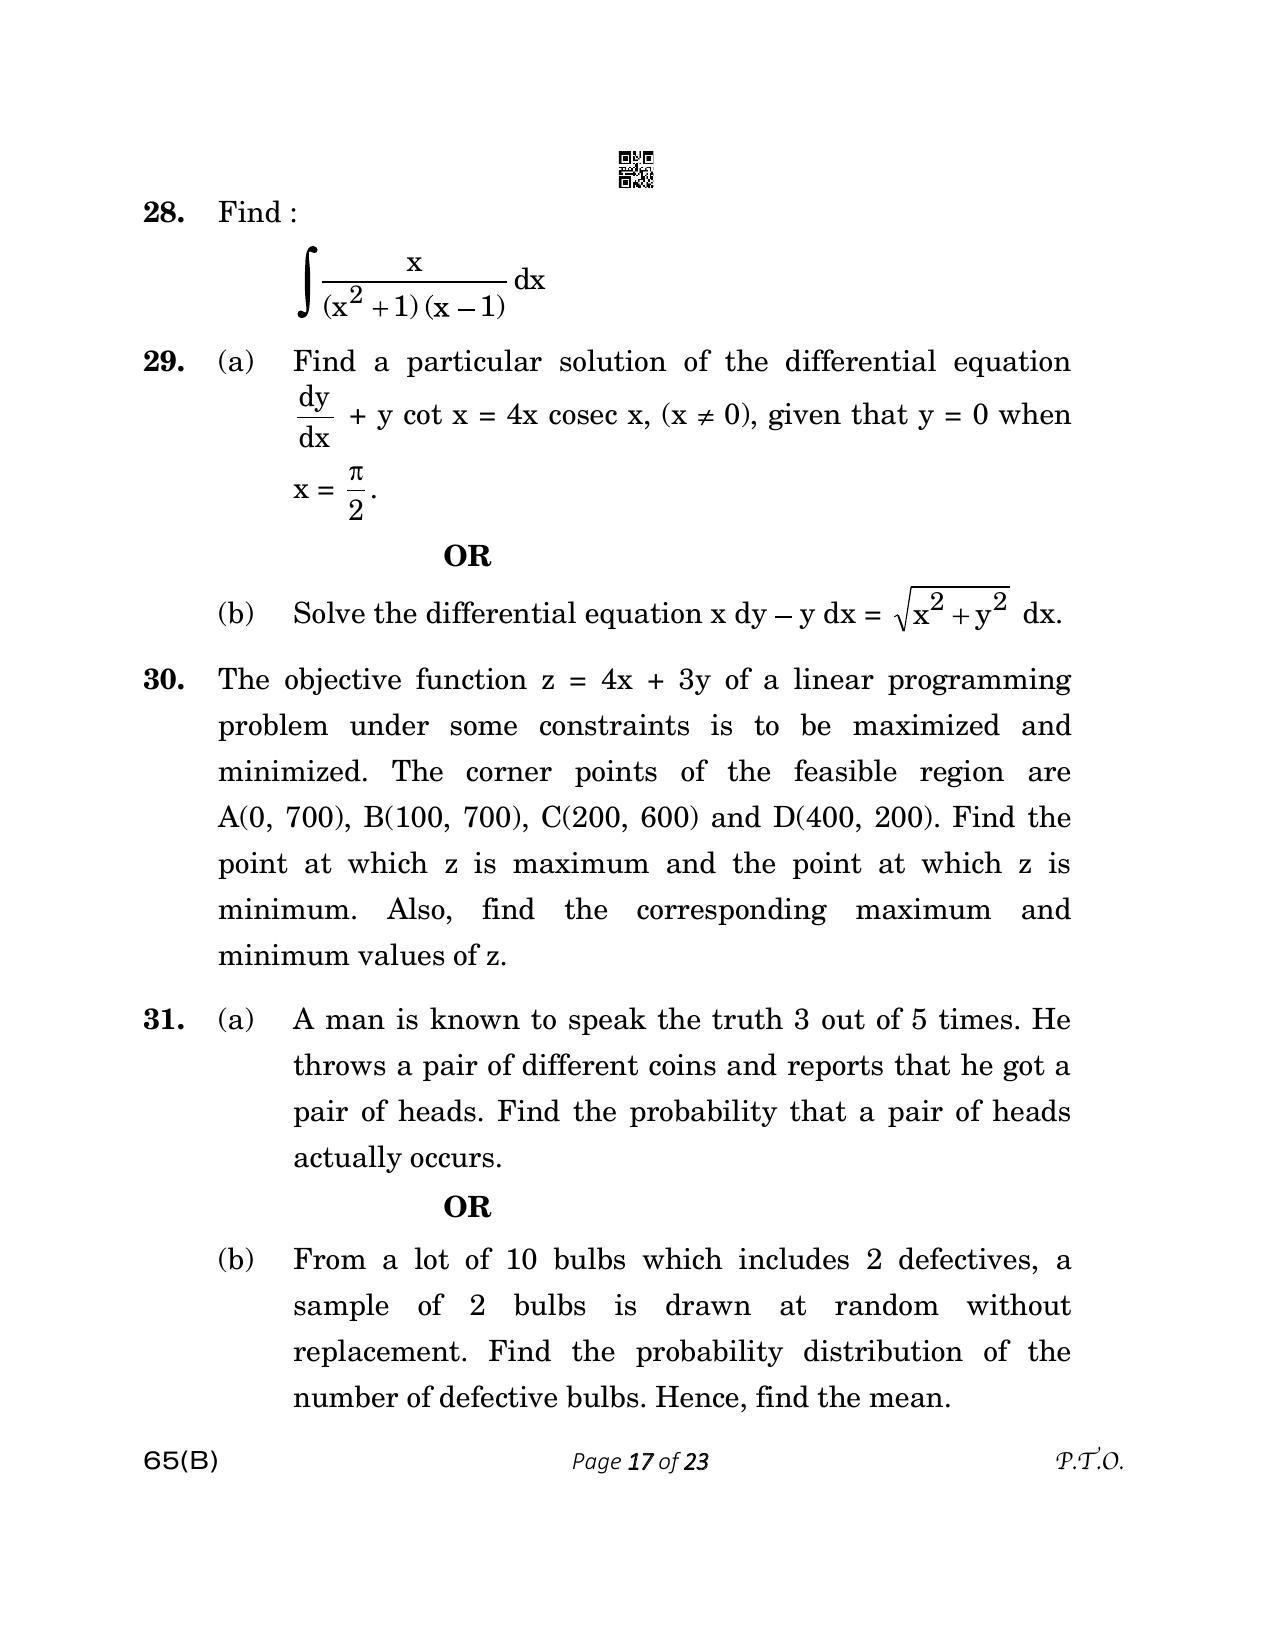 CBSE Class 12 65(B) MATHEMATICS FOR VI 2023 Question Paper - Page 17